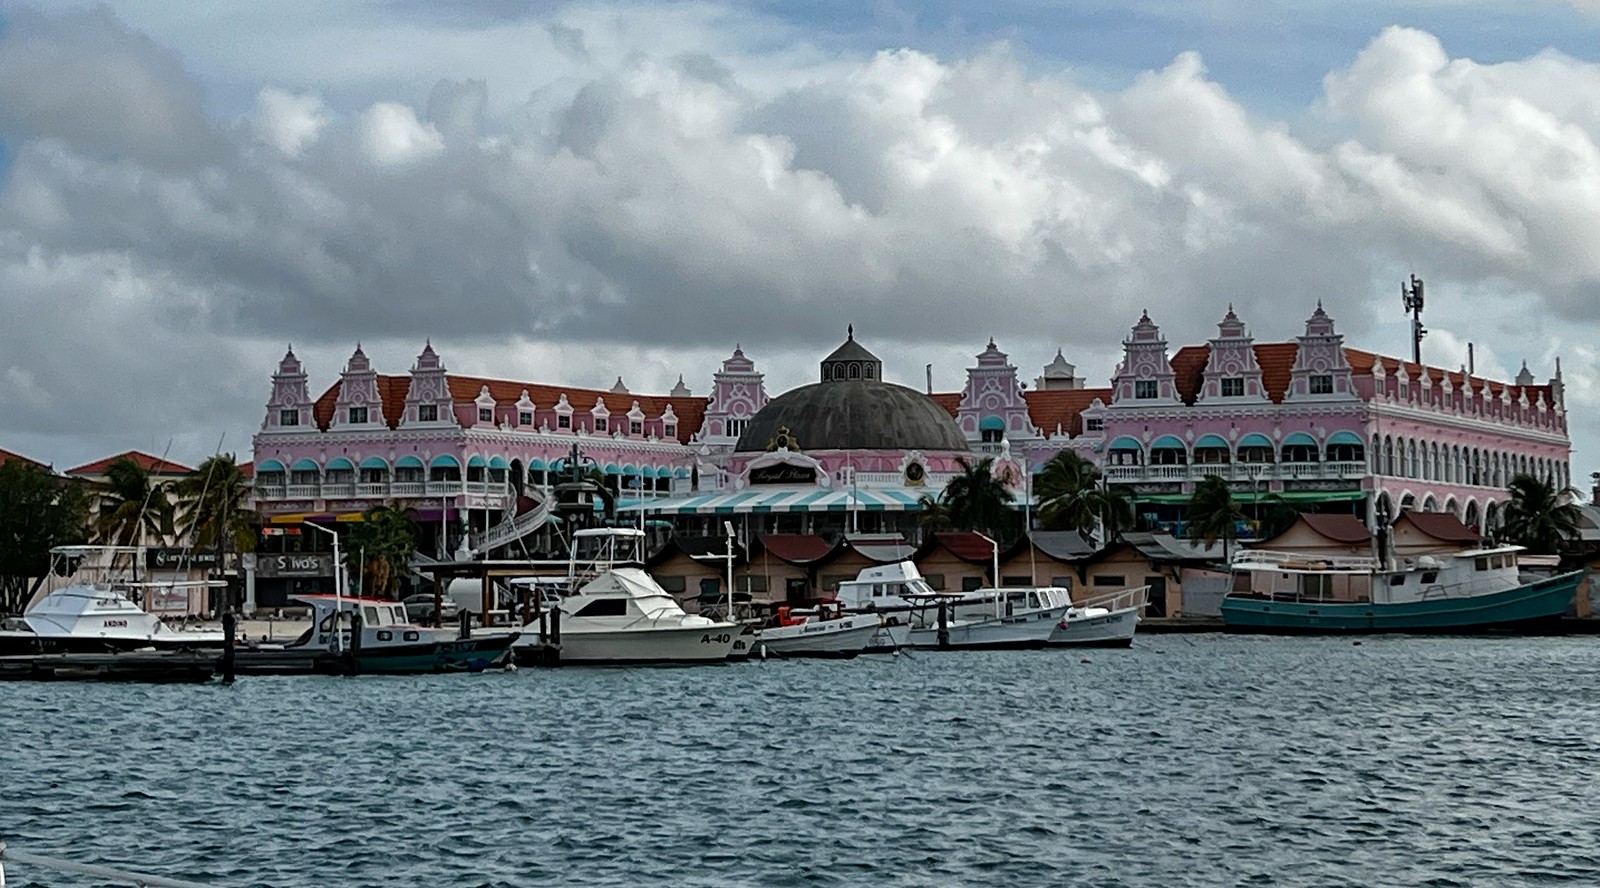 Royal Plaza Mall and marina